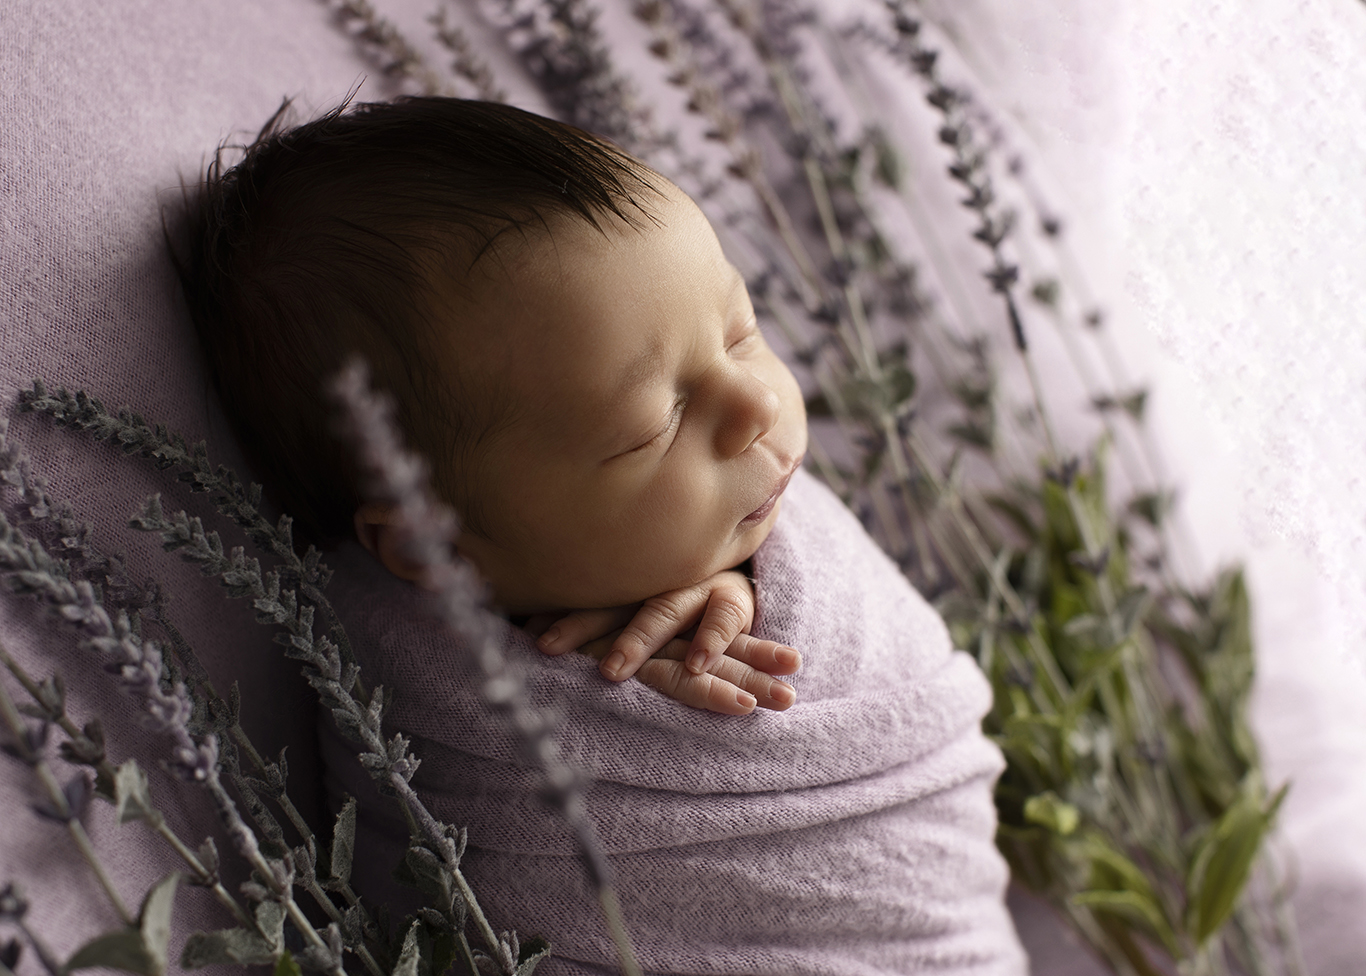 Kerry Goodwin Photography Newborn photo shoot